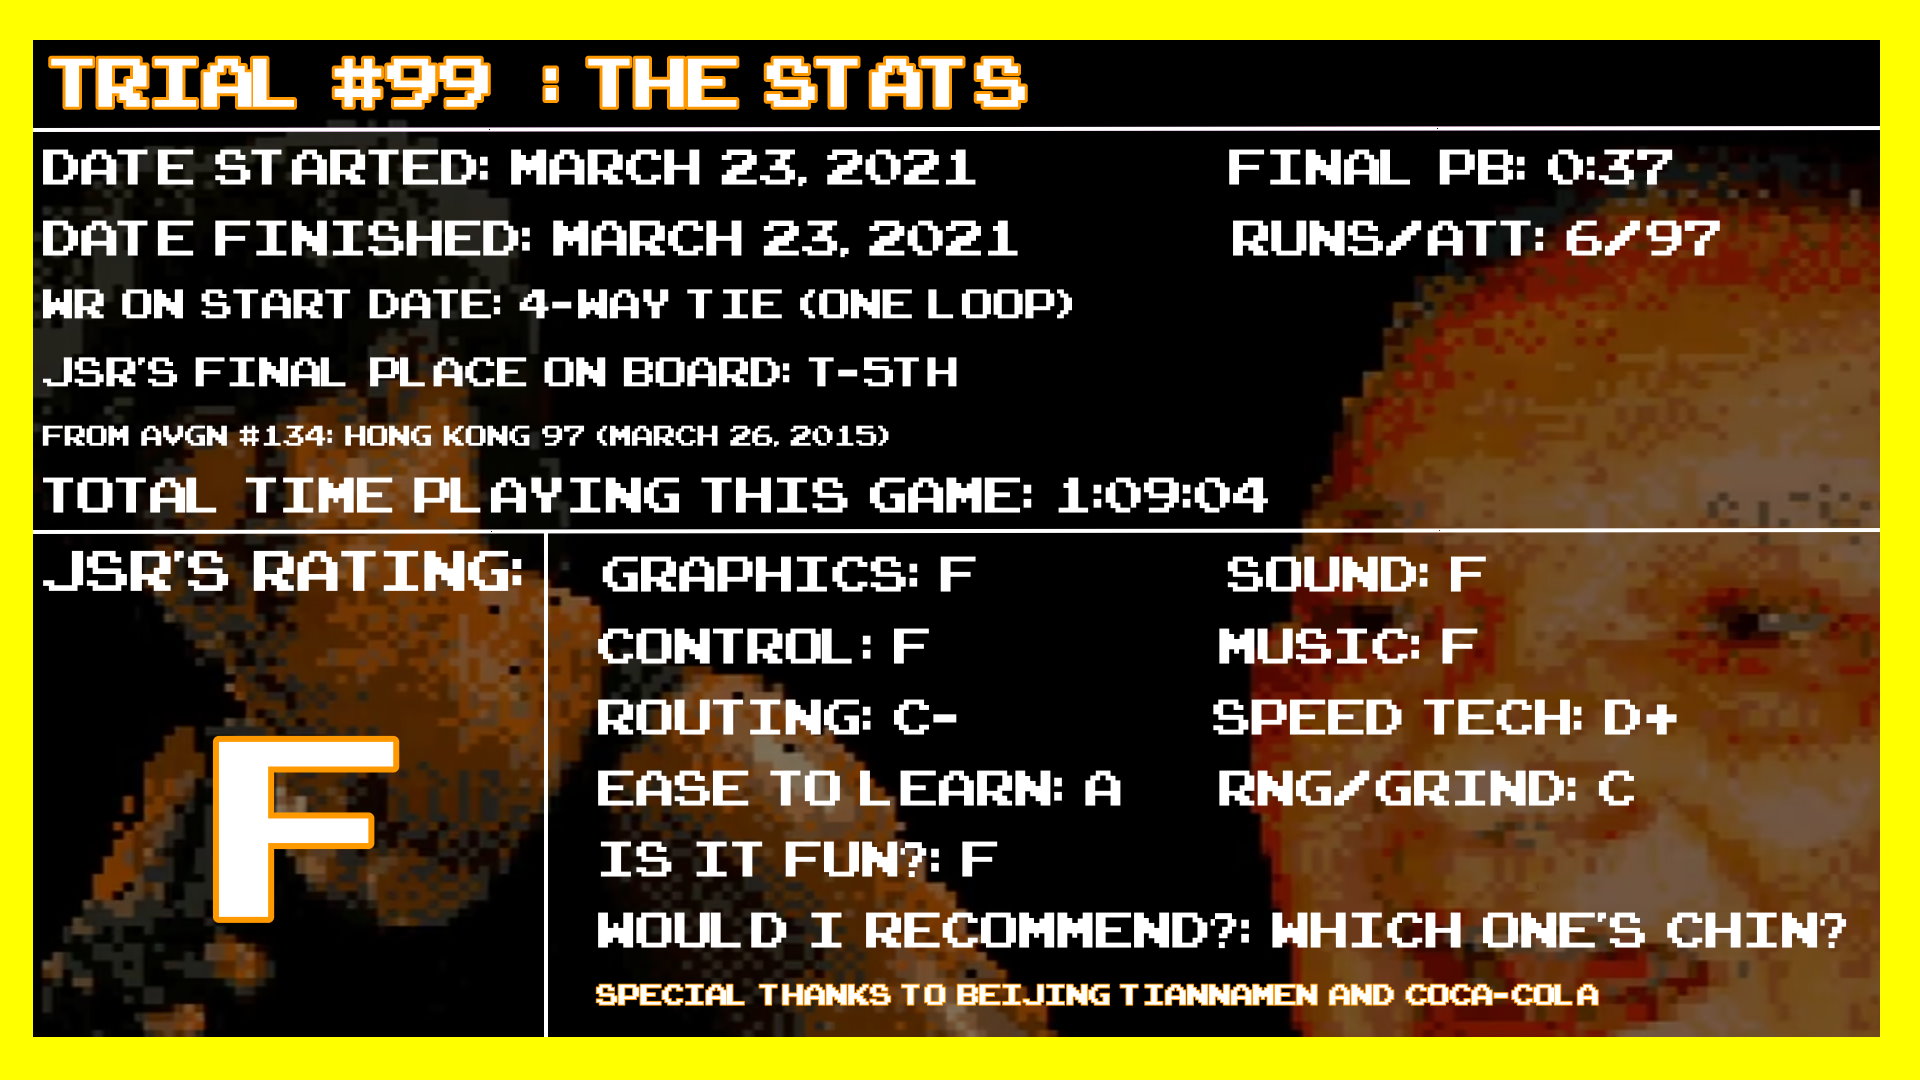 Pac-Man 99 - Speedrun